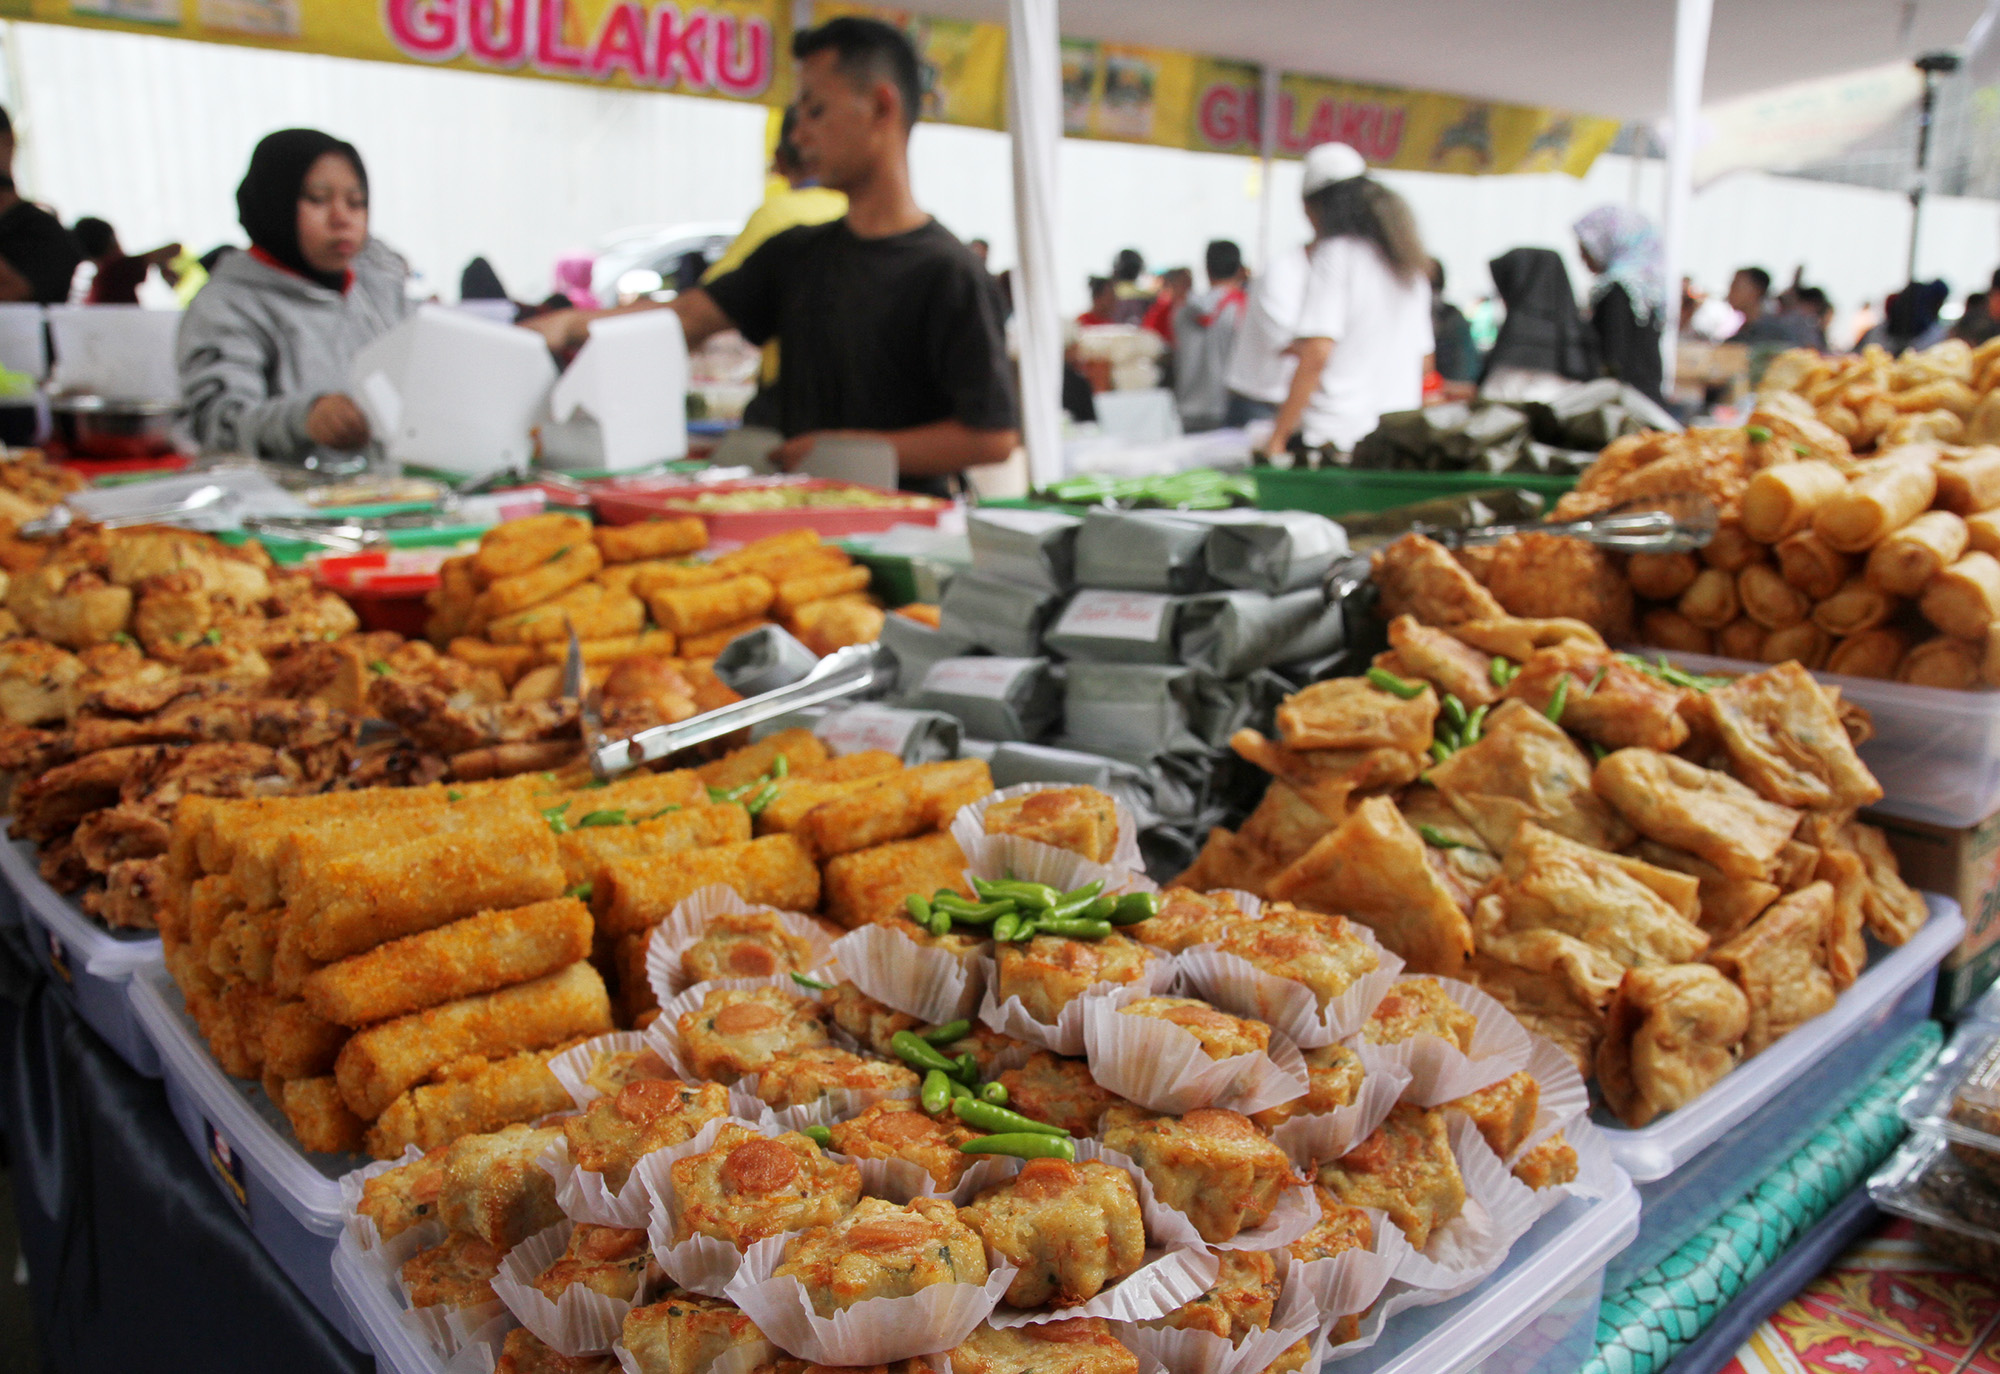 Pengunjung membeli takjil atau makanan berbuka puasa di Pasar Takjil Bendungan Hilir (Benhil), Jakarta Pusat, Kamis (16/3).(Sinarharapan.com/Oke Atmaja)